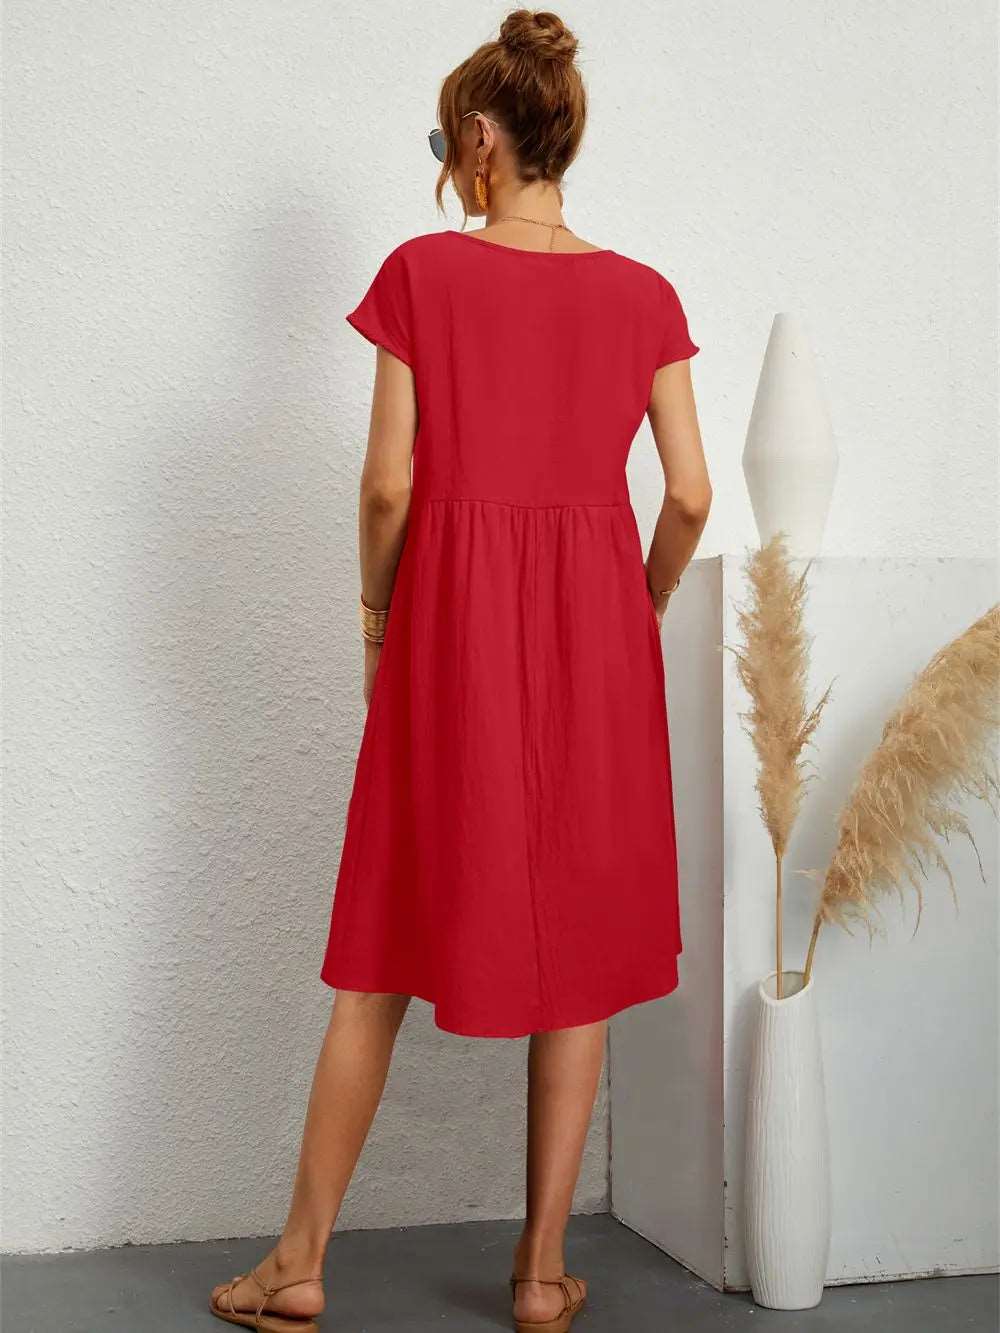 Women's casual dresses | Comfortable knee length with pockets |BEGOGI SHOP |